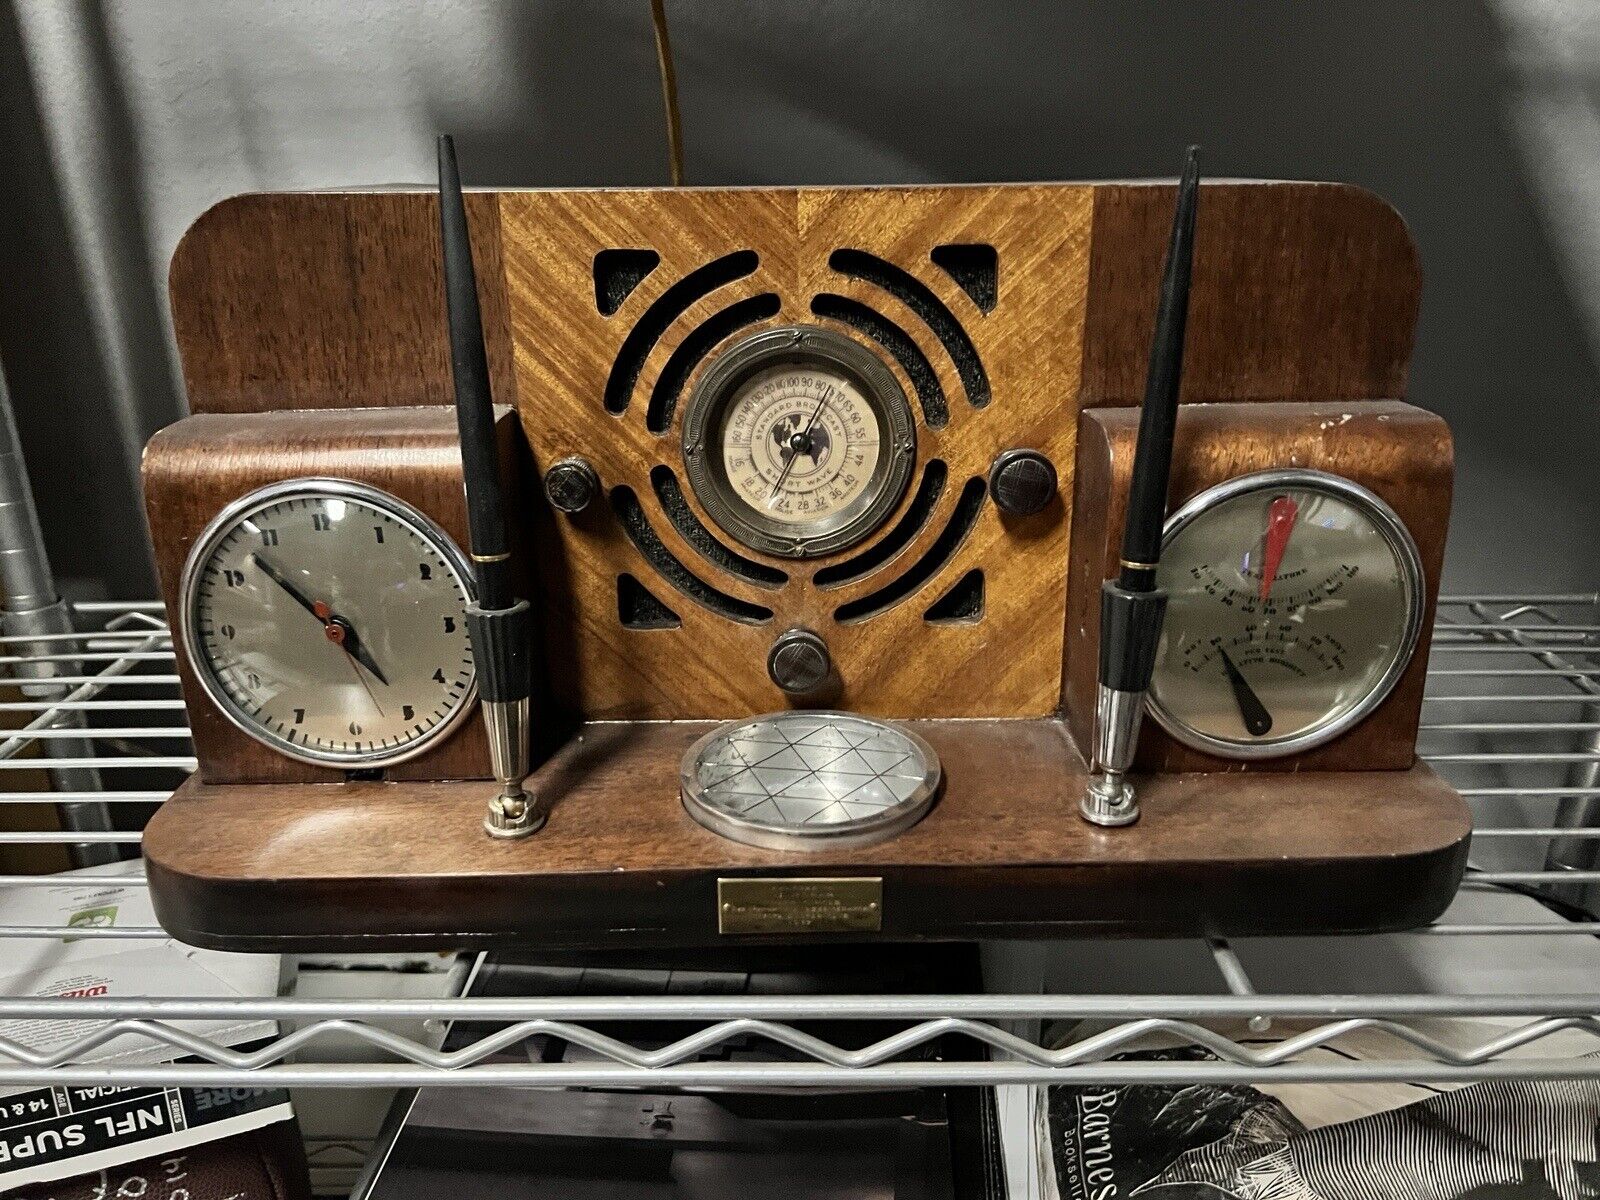 Detrola Presentation Radio With Gilbert rohde Clock And barometer